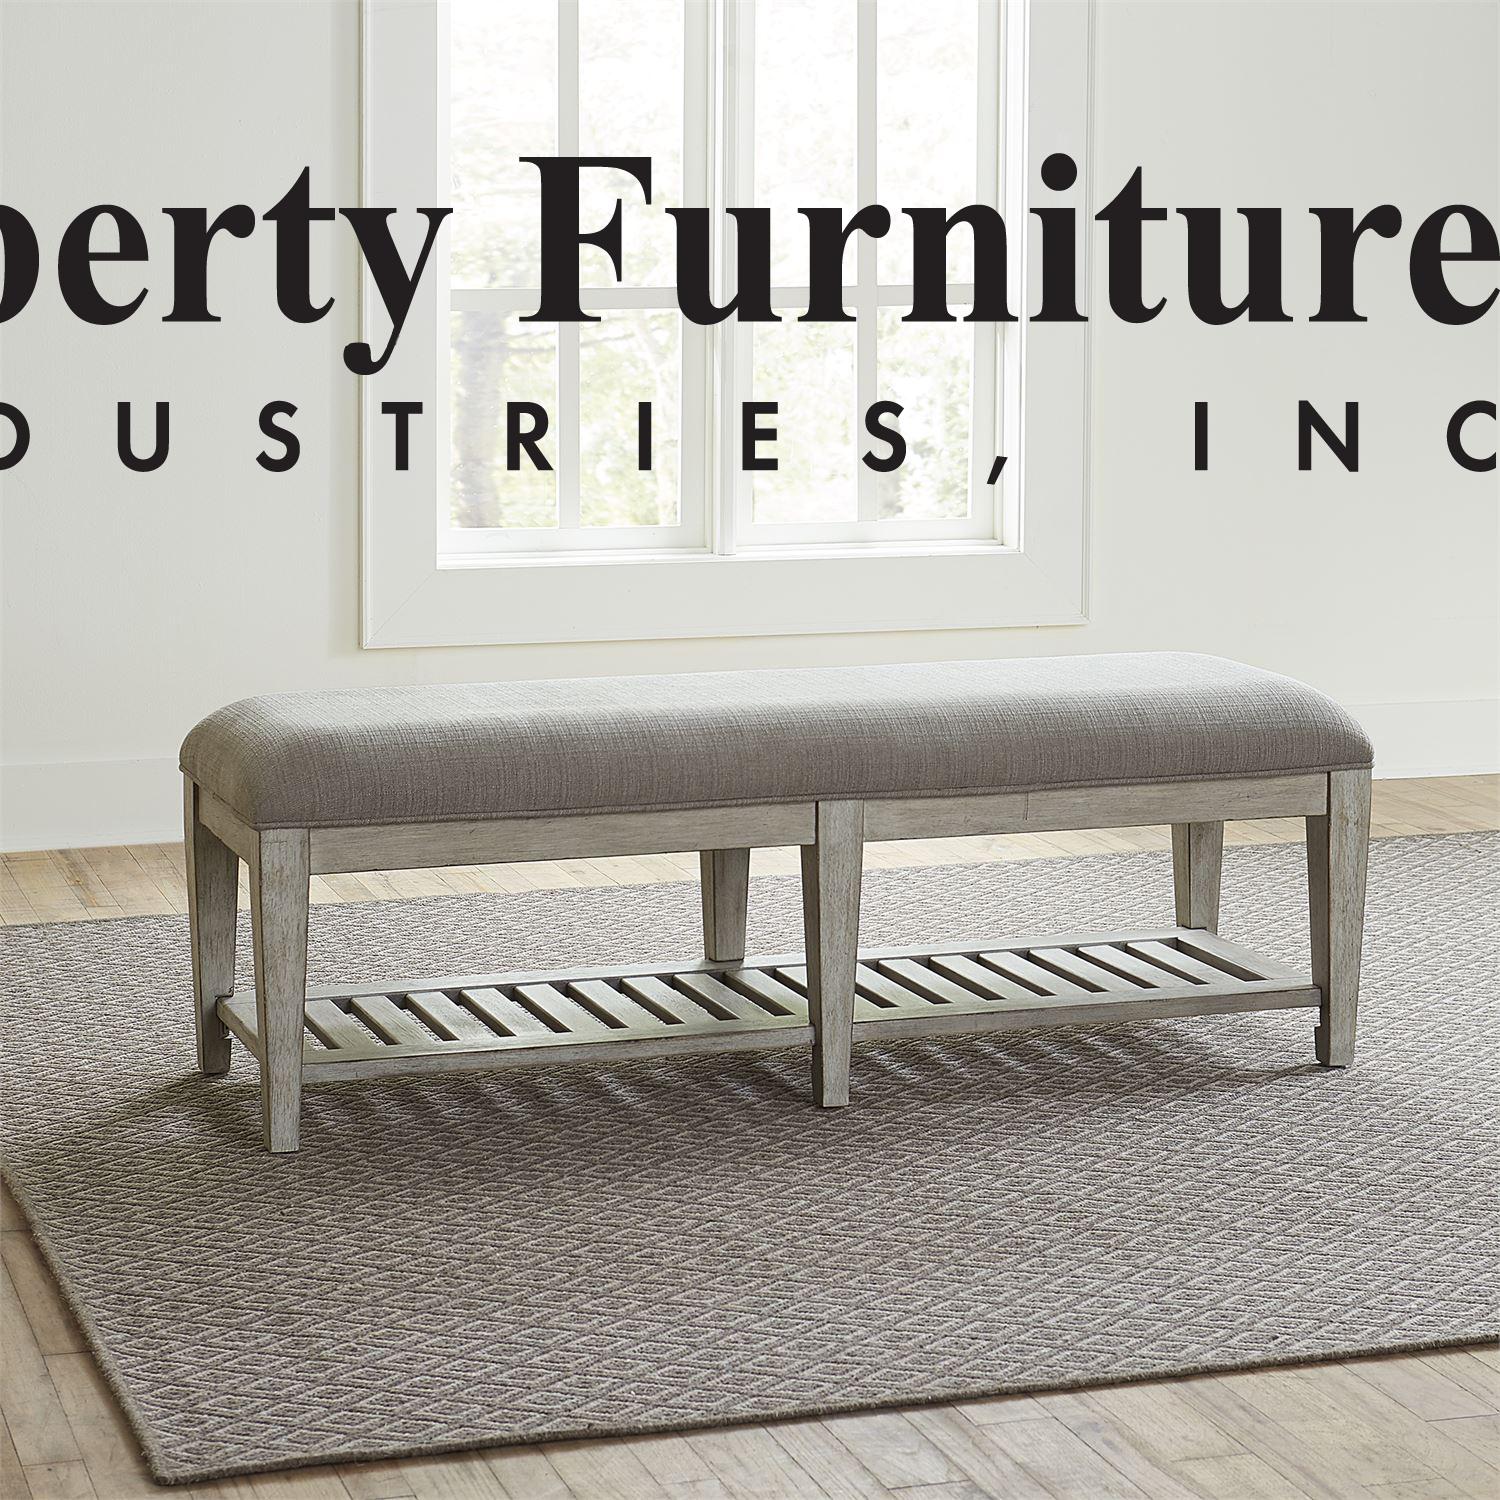 Heartland bed bench,Liberty Furniture